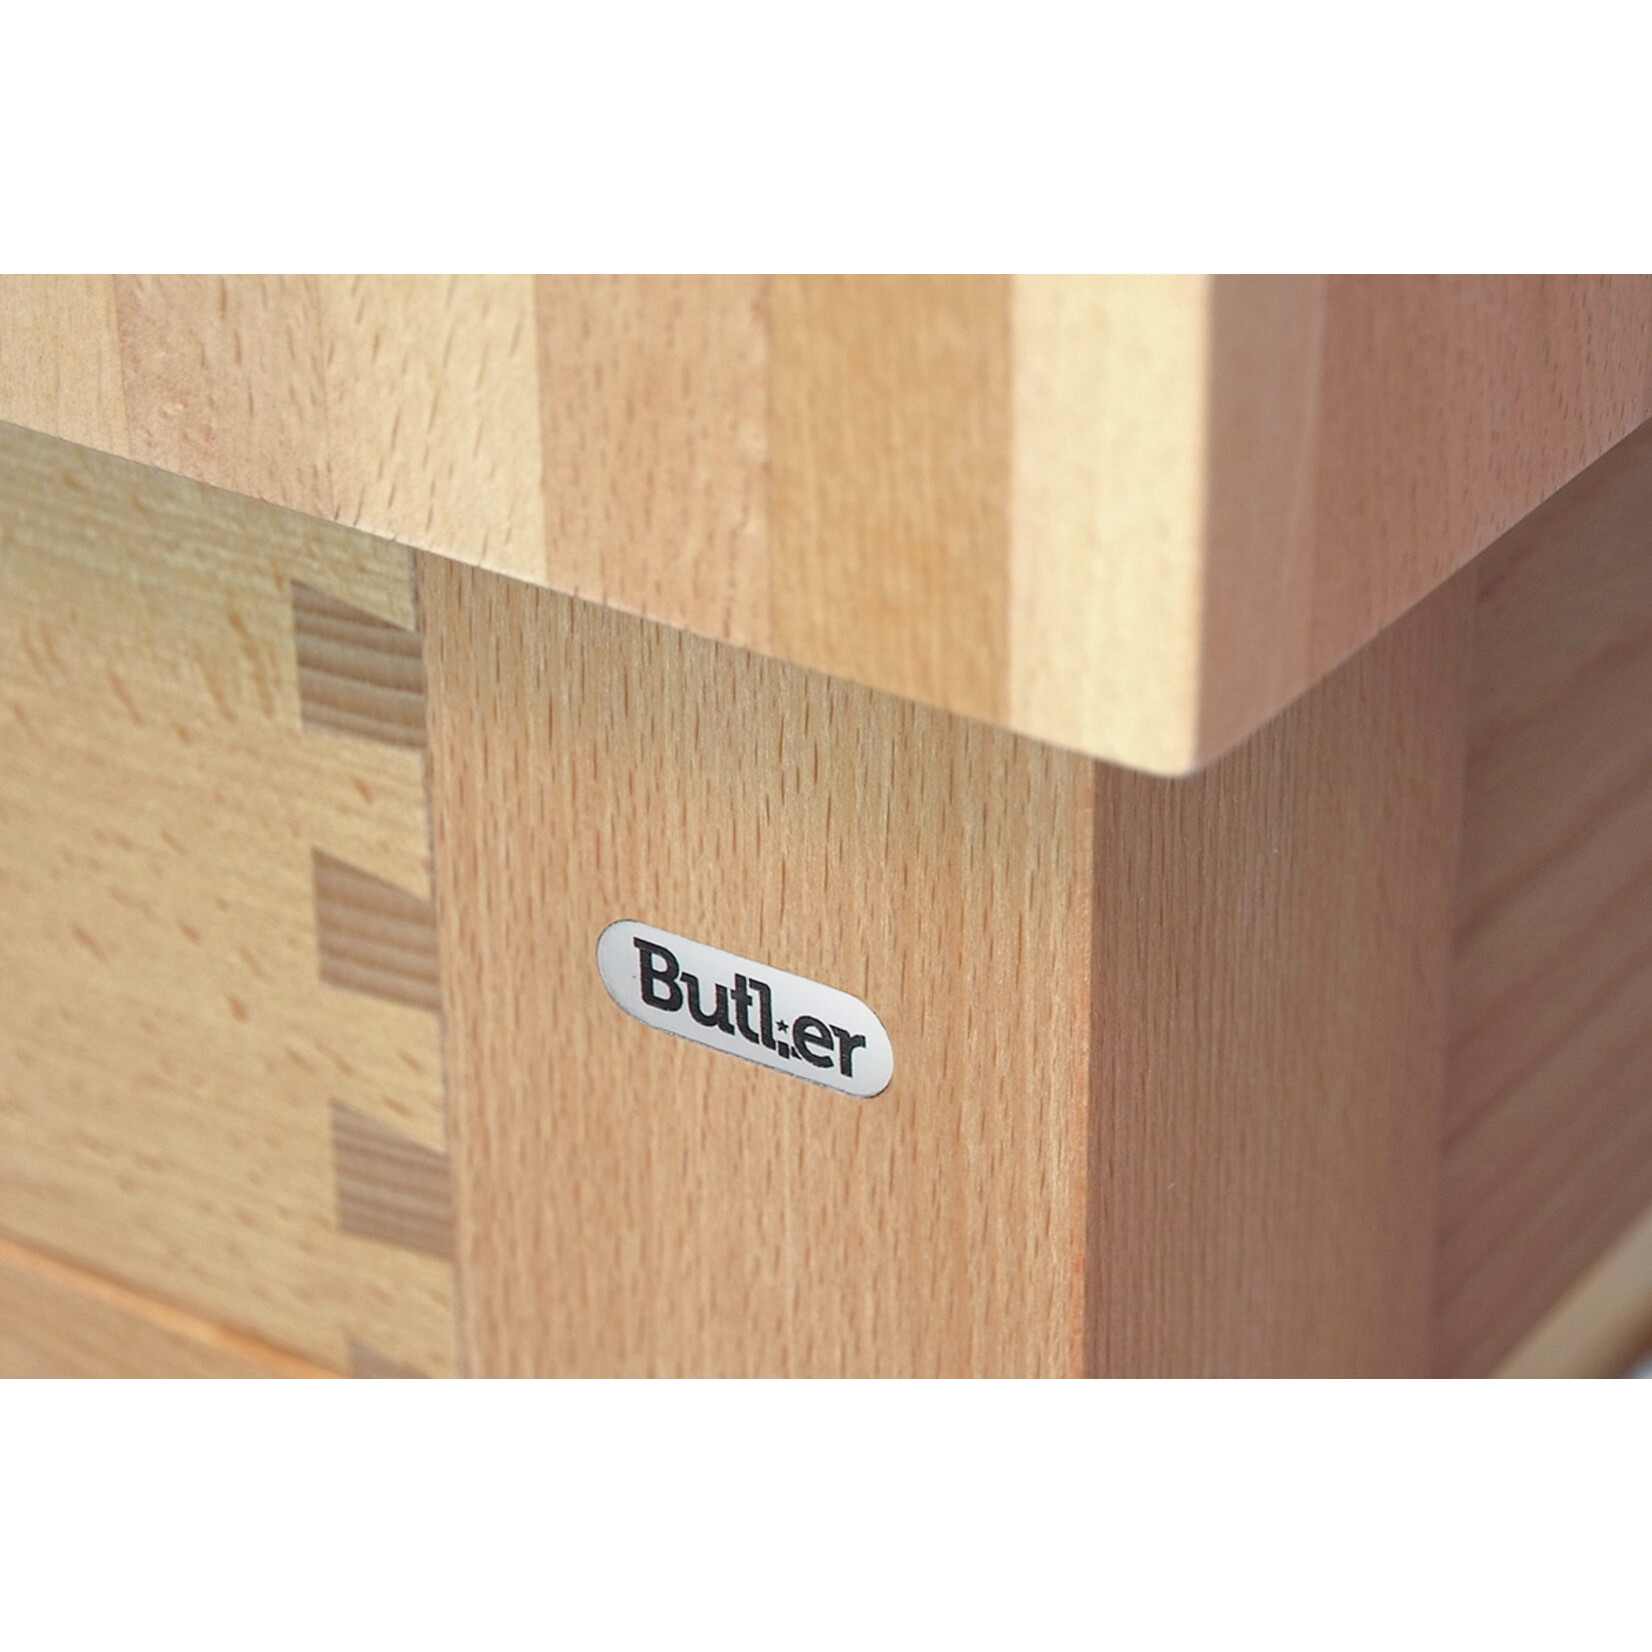 Butler Butler keukentrolley M-600, beukenhout, langshouten blad